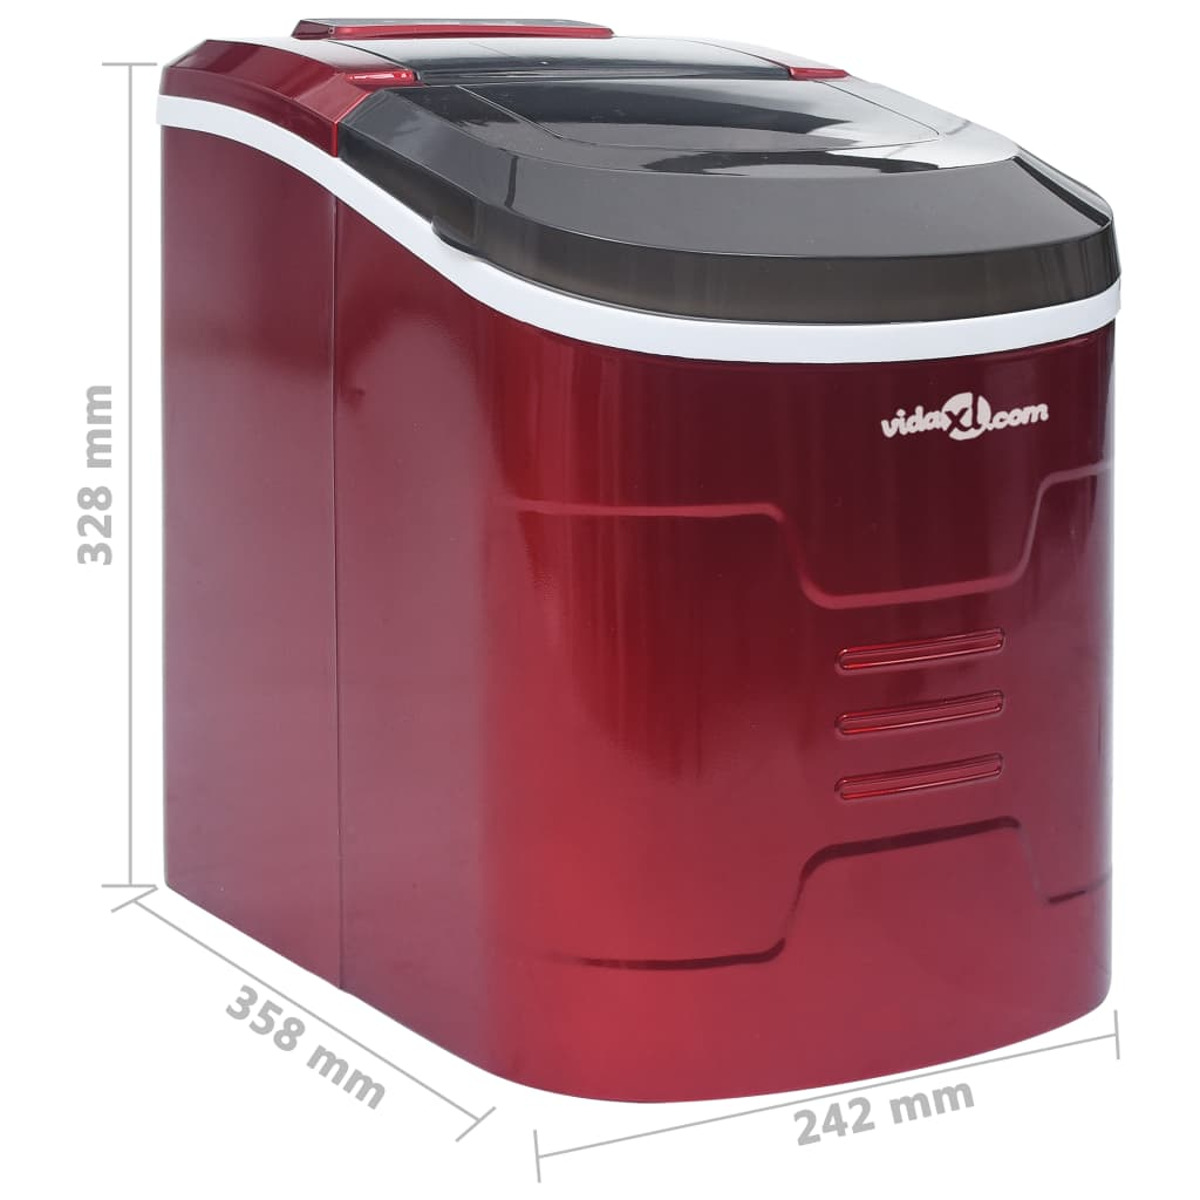 VIDAXL 51100 Eiswürfelmaschine (112 Rot) Watt